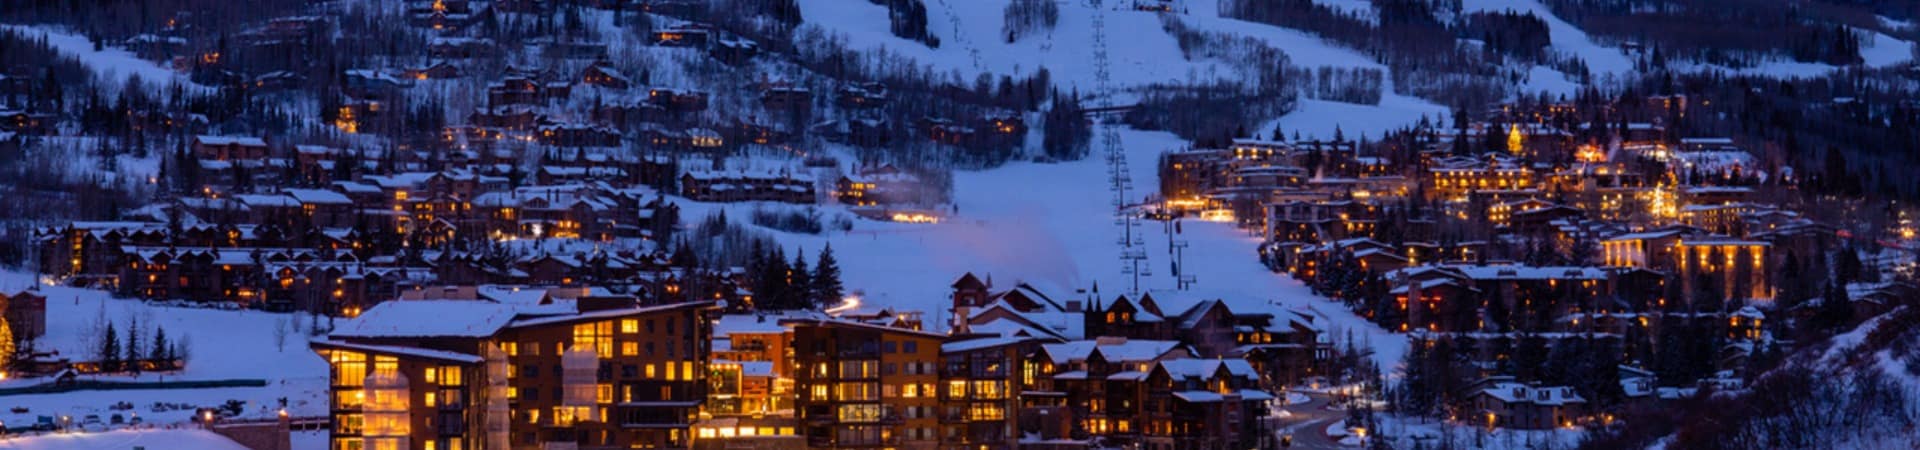 Aspen Colorado base vila alojamento snowmass noite